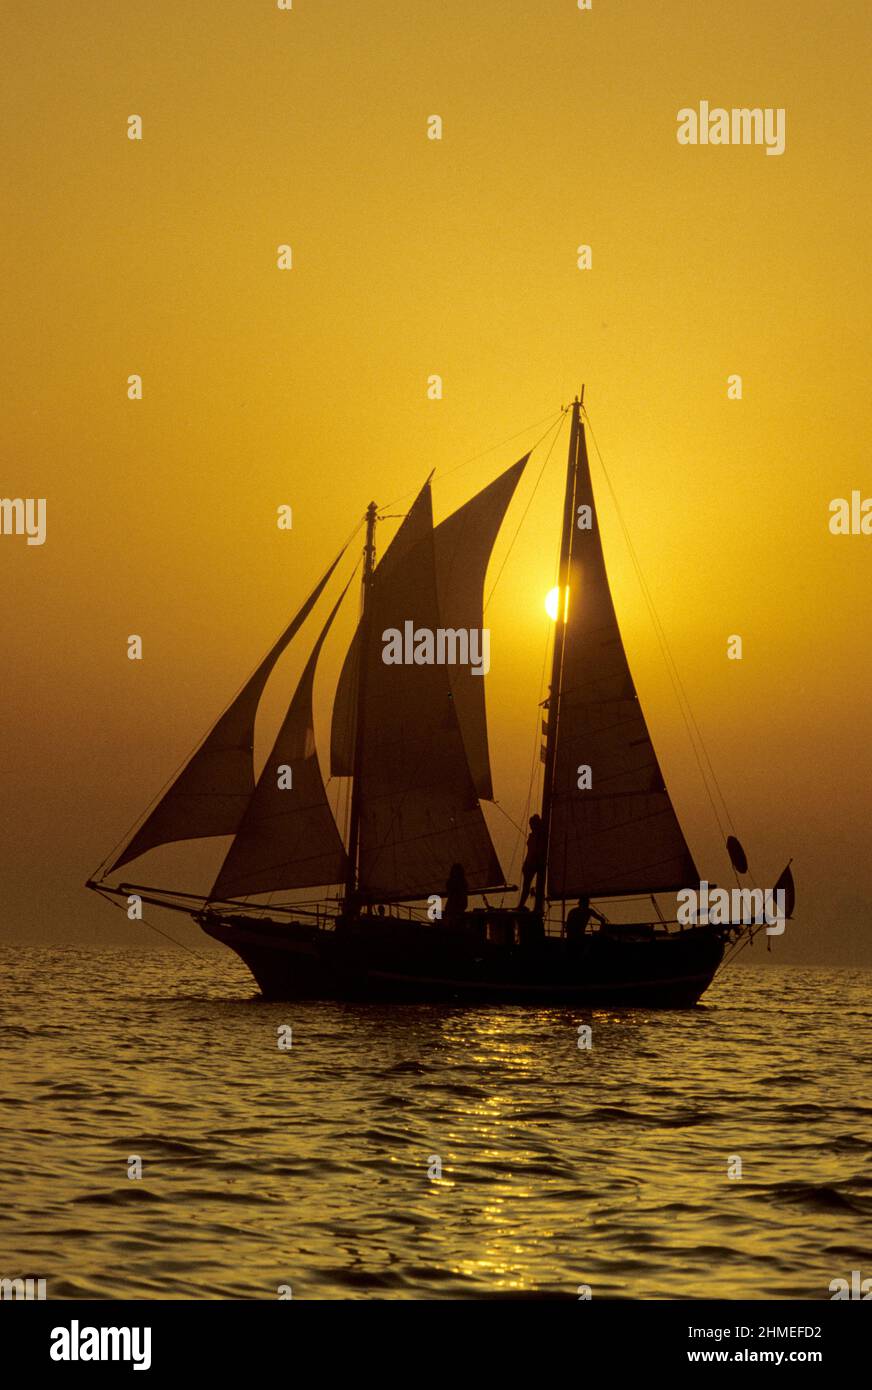 shooner sunset mediterranean sea Stock Photo